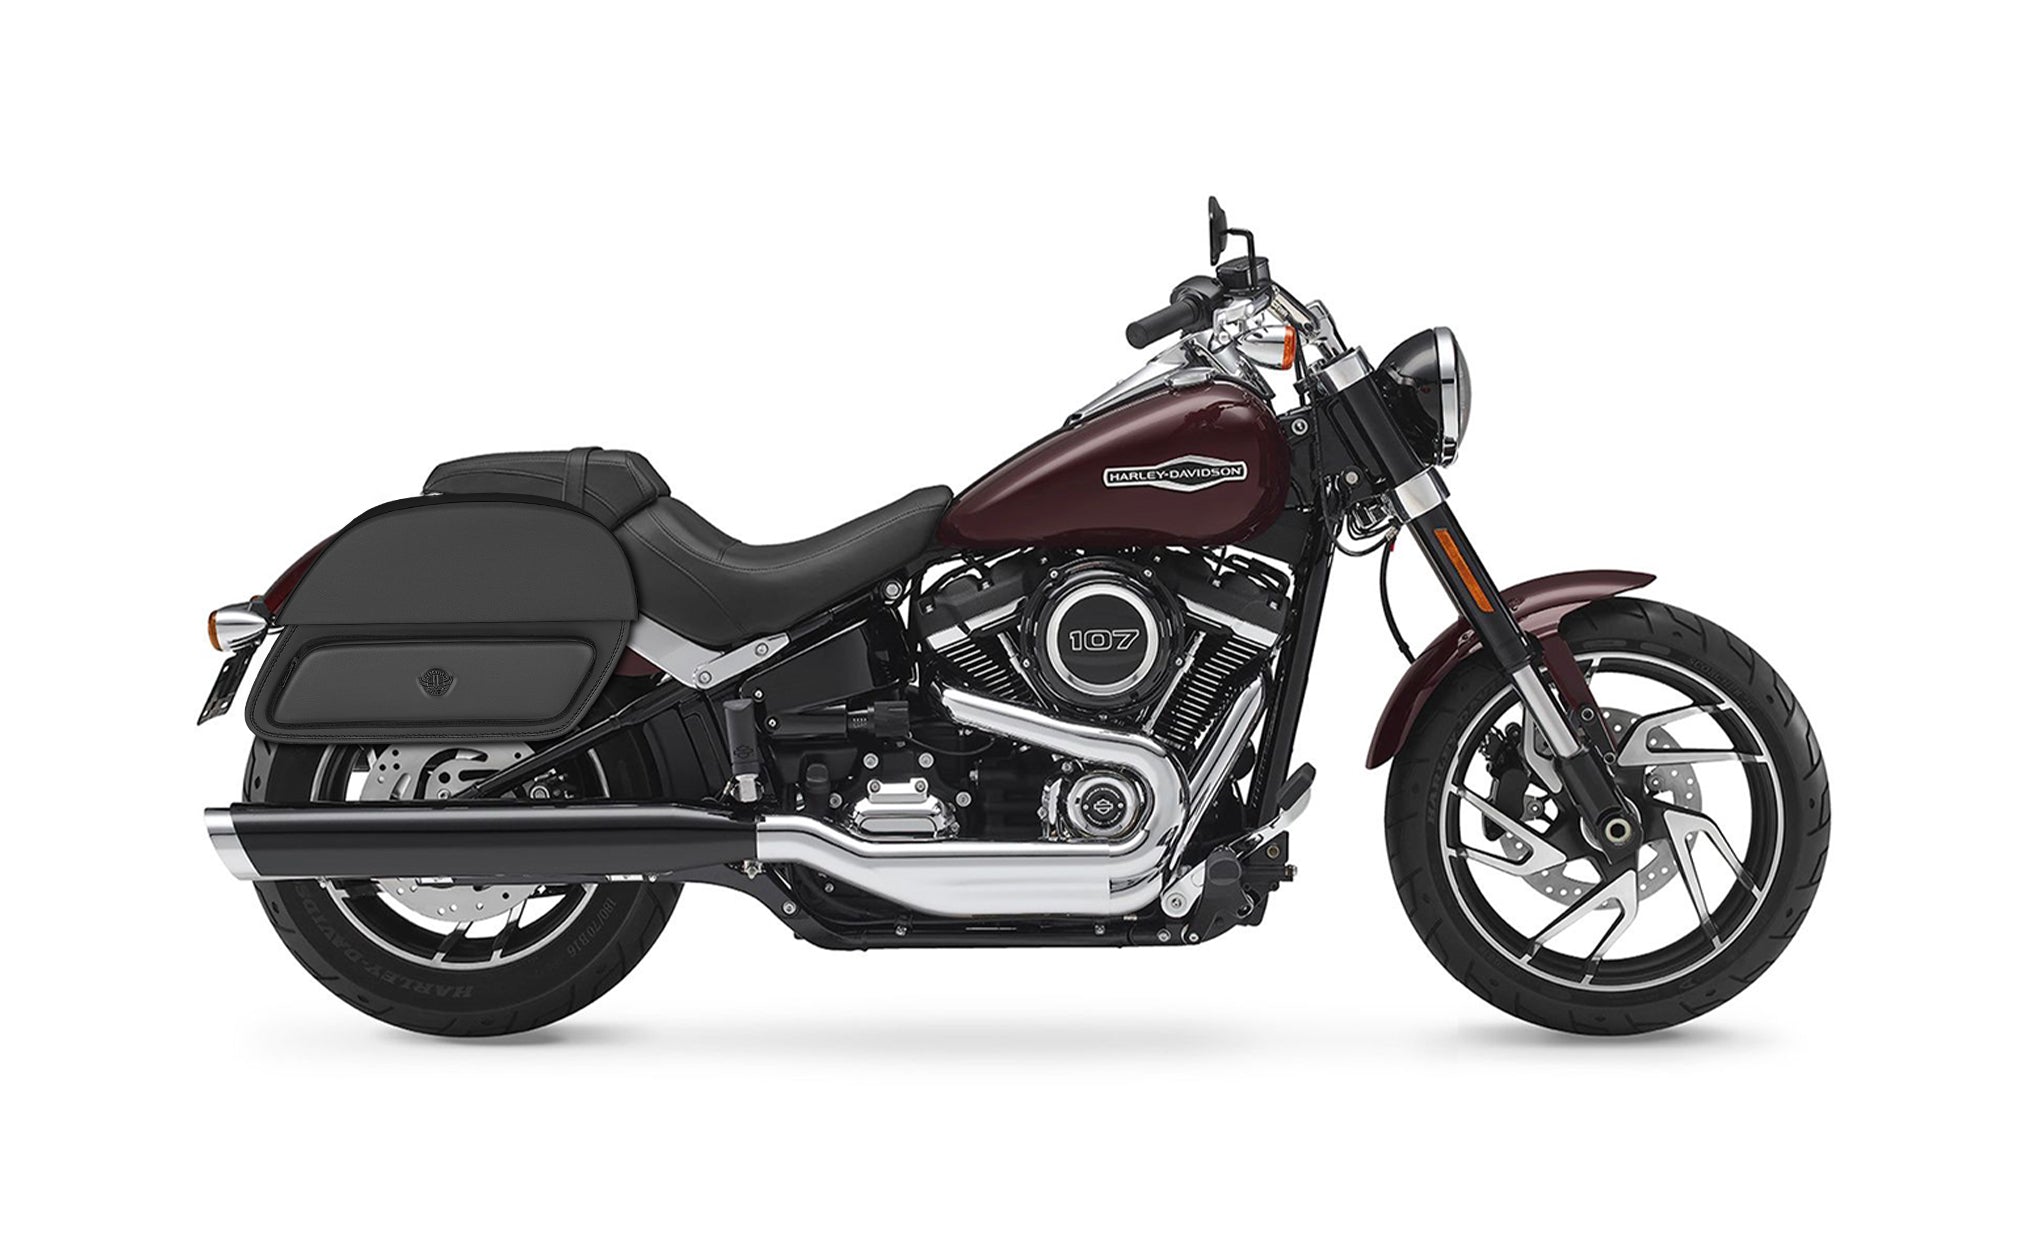 28L - Pantheon Medium Motorcycle Saddlebags for Harley Softail Sport Glide FLSB on Bike Photo @expand